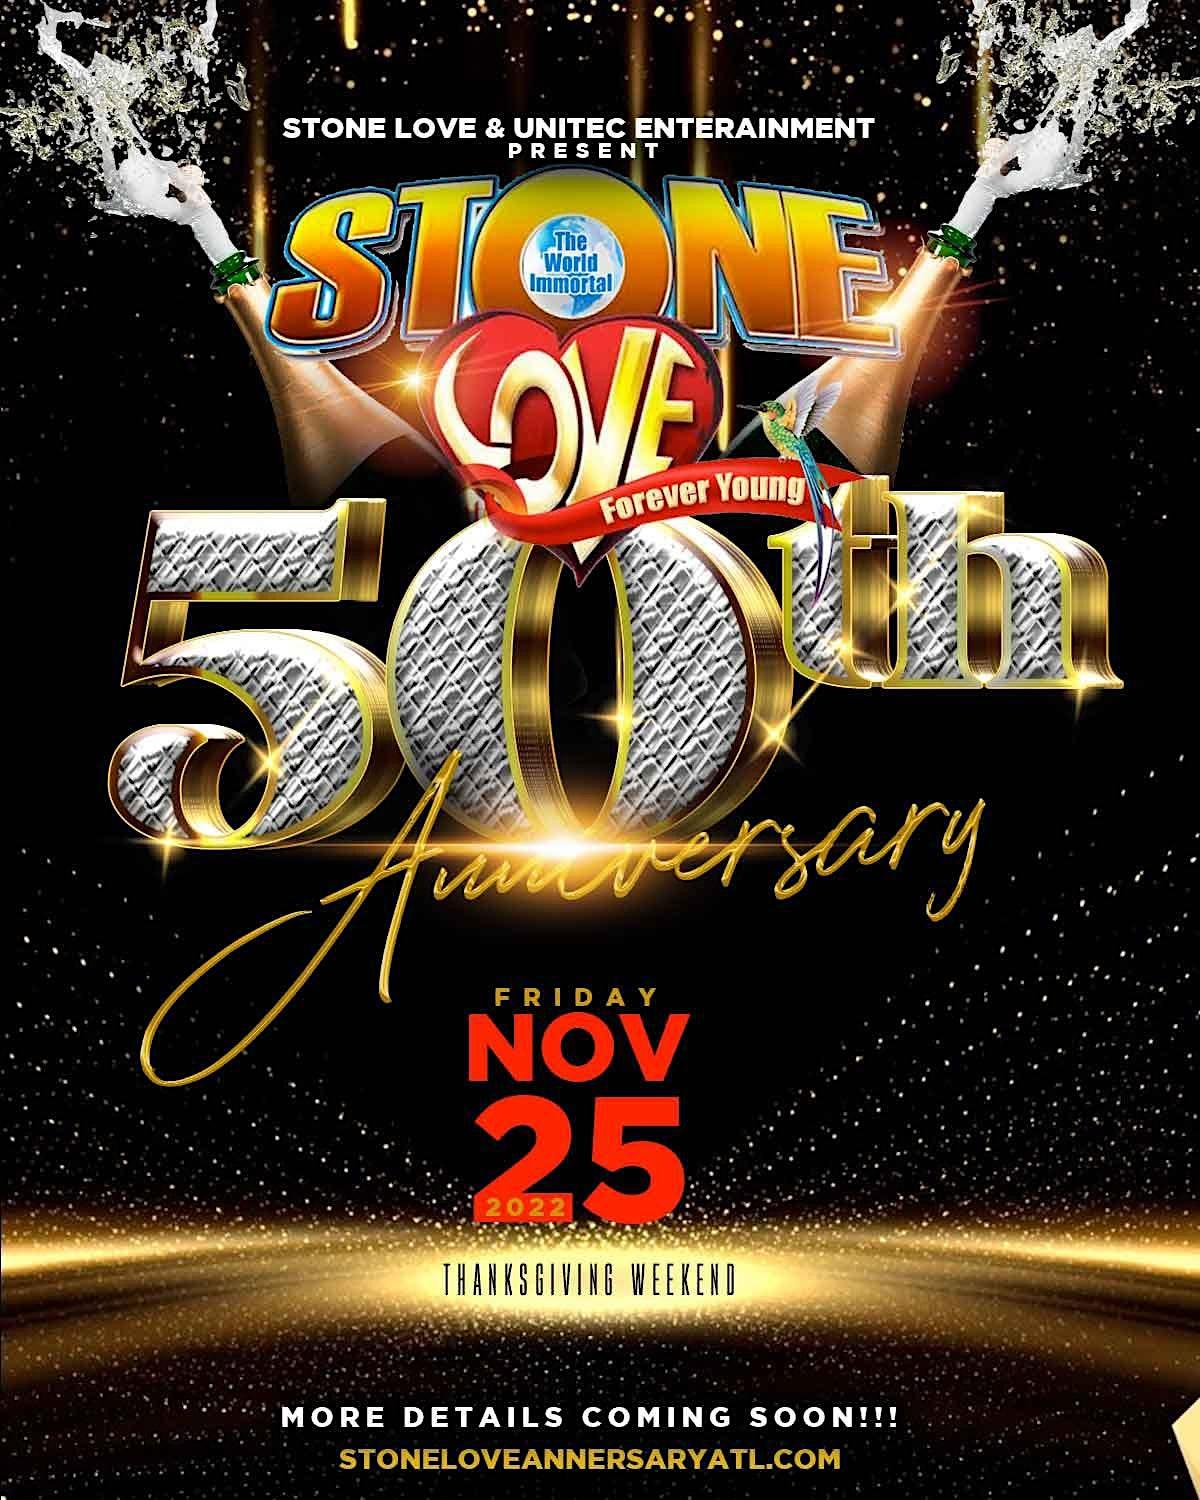 Stone Love 50th Anniversary Celebration- Atlanta
Fri Nov 25, 10:00 PM - Sat Nov 26, 4:00 AM
in 41 days